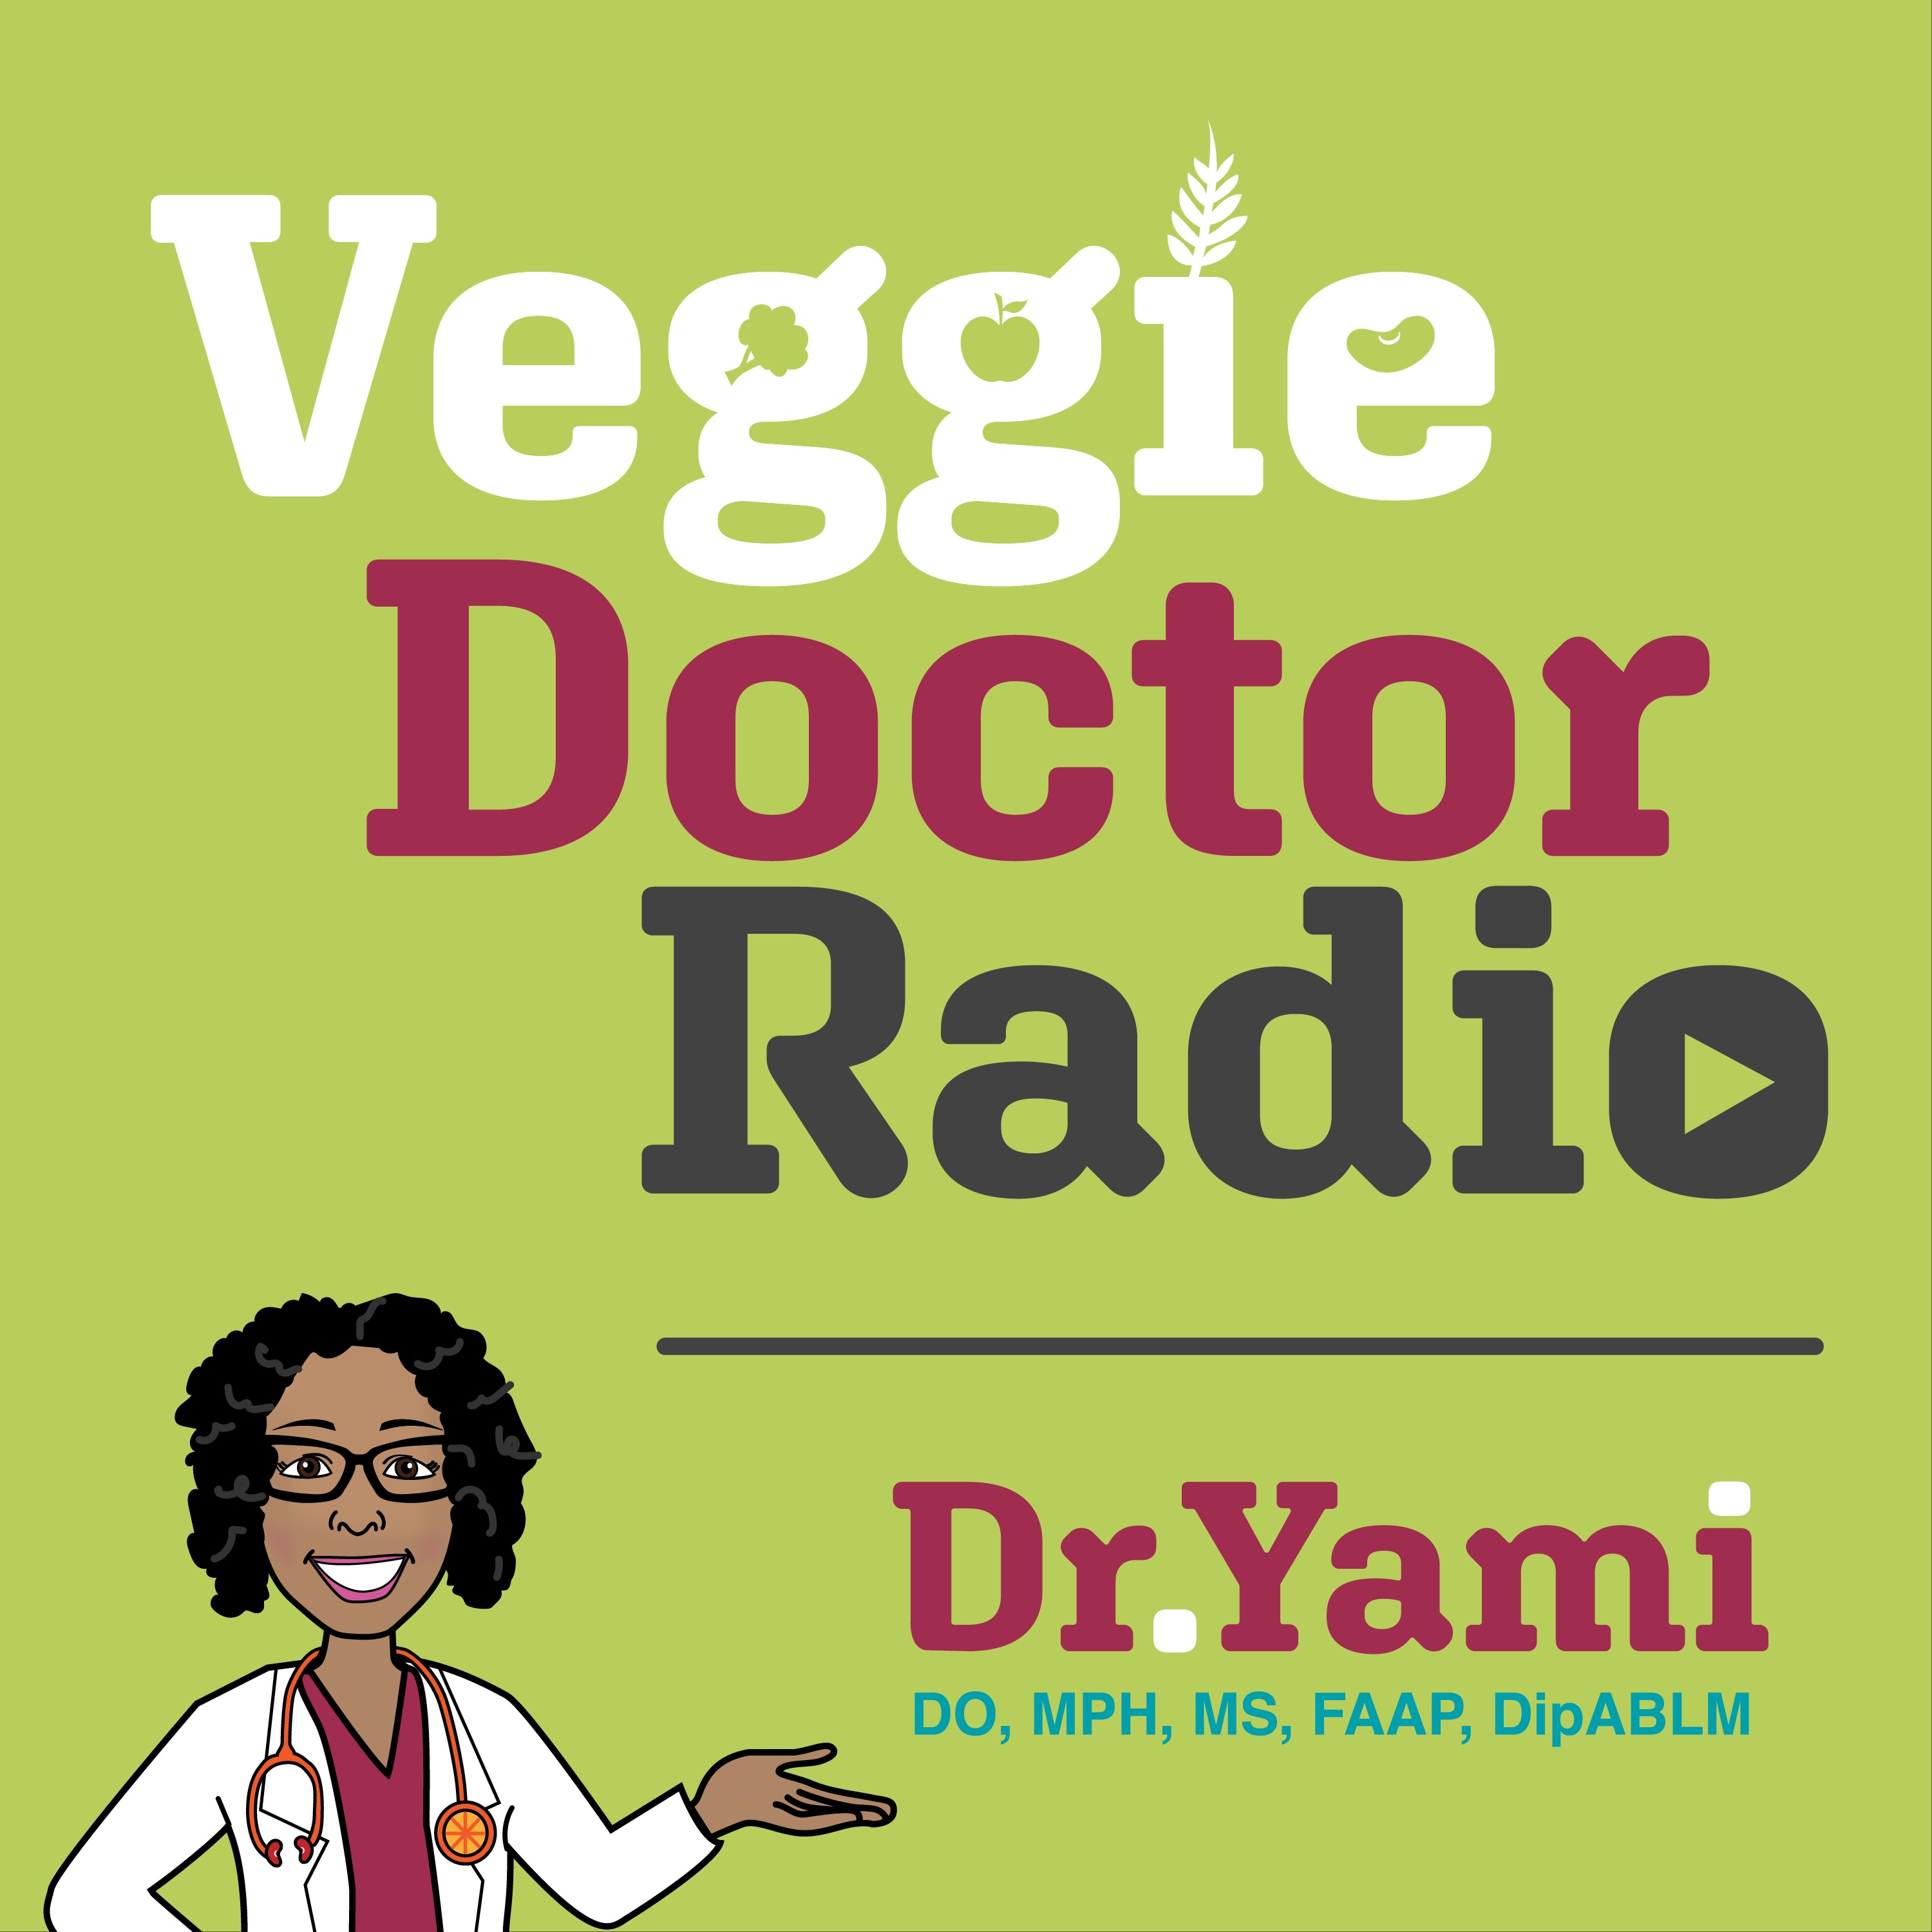 244: Save money AND time with Plant-Based on a Budget founder Toni Okamoto (Veggie Doctor Radio)